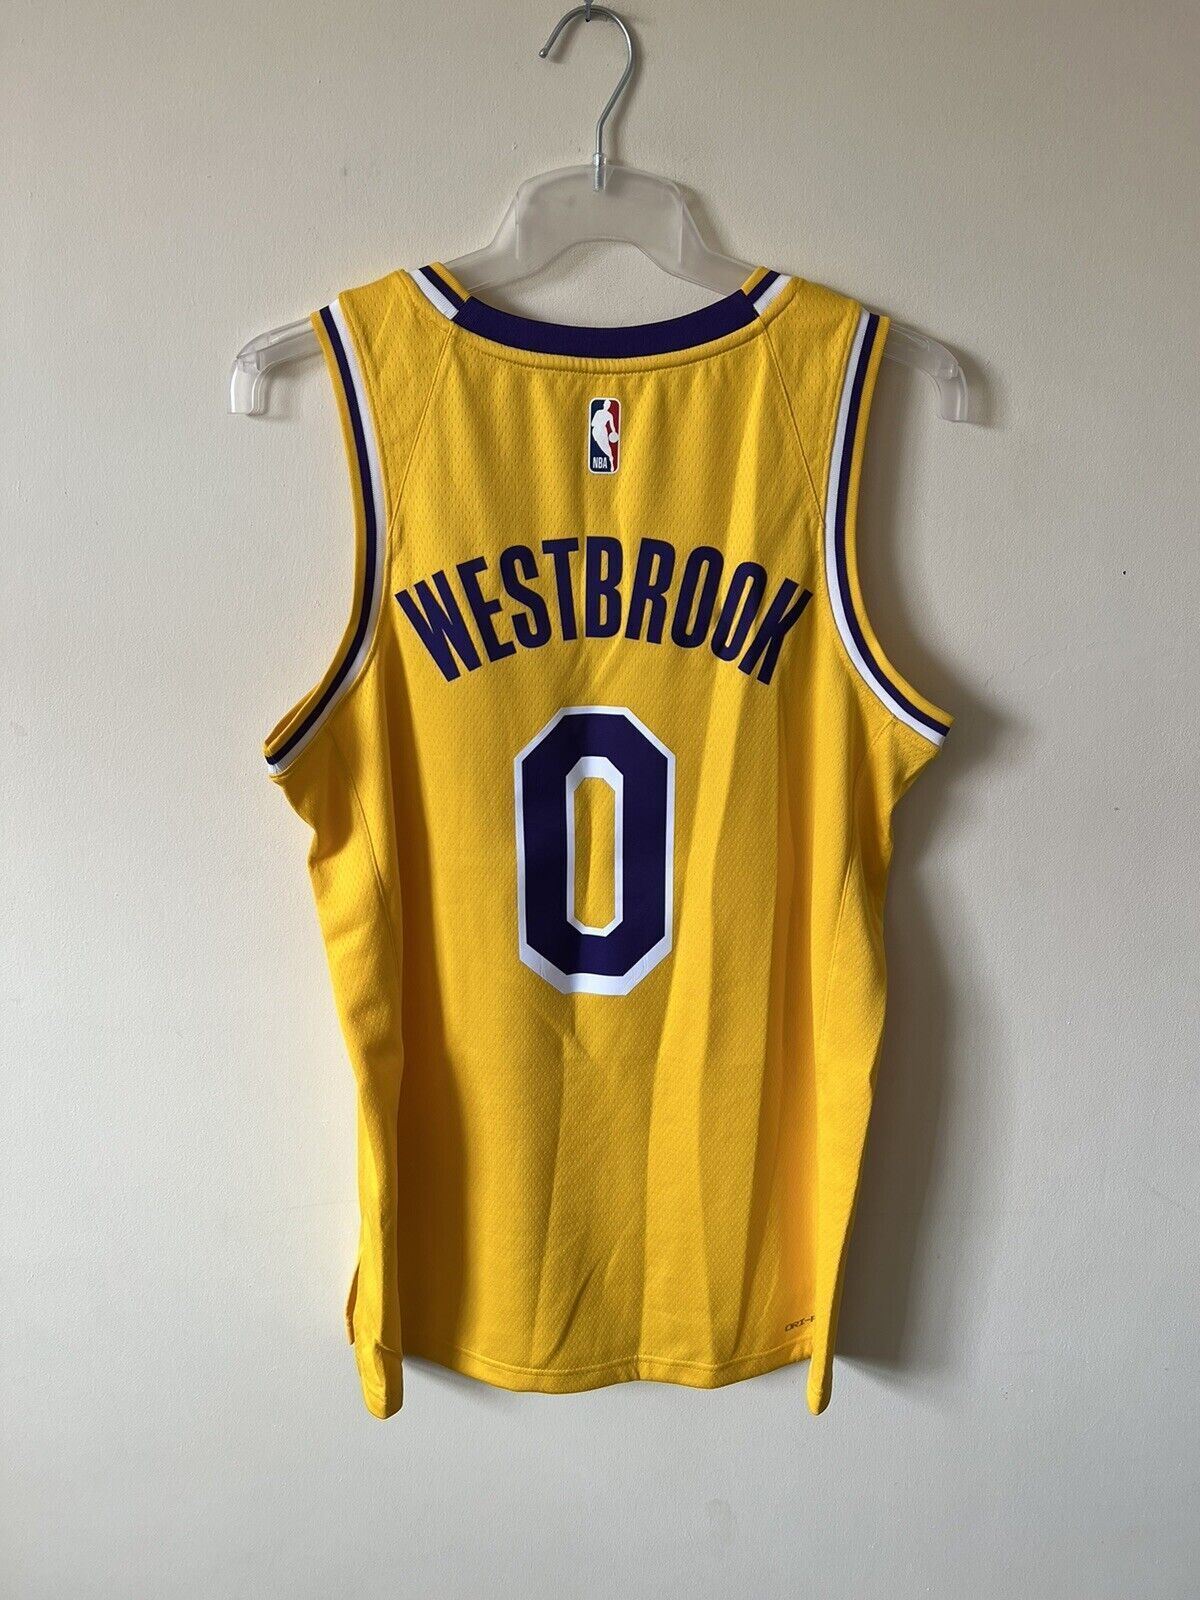 Nike NBA LA Lakers Icon Edition Jersey WESTBROOK 0 Basketball Men’s Medium